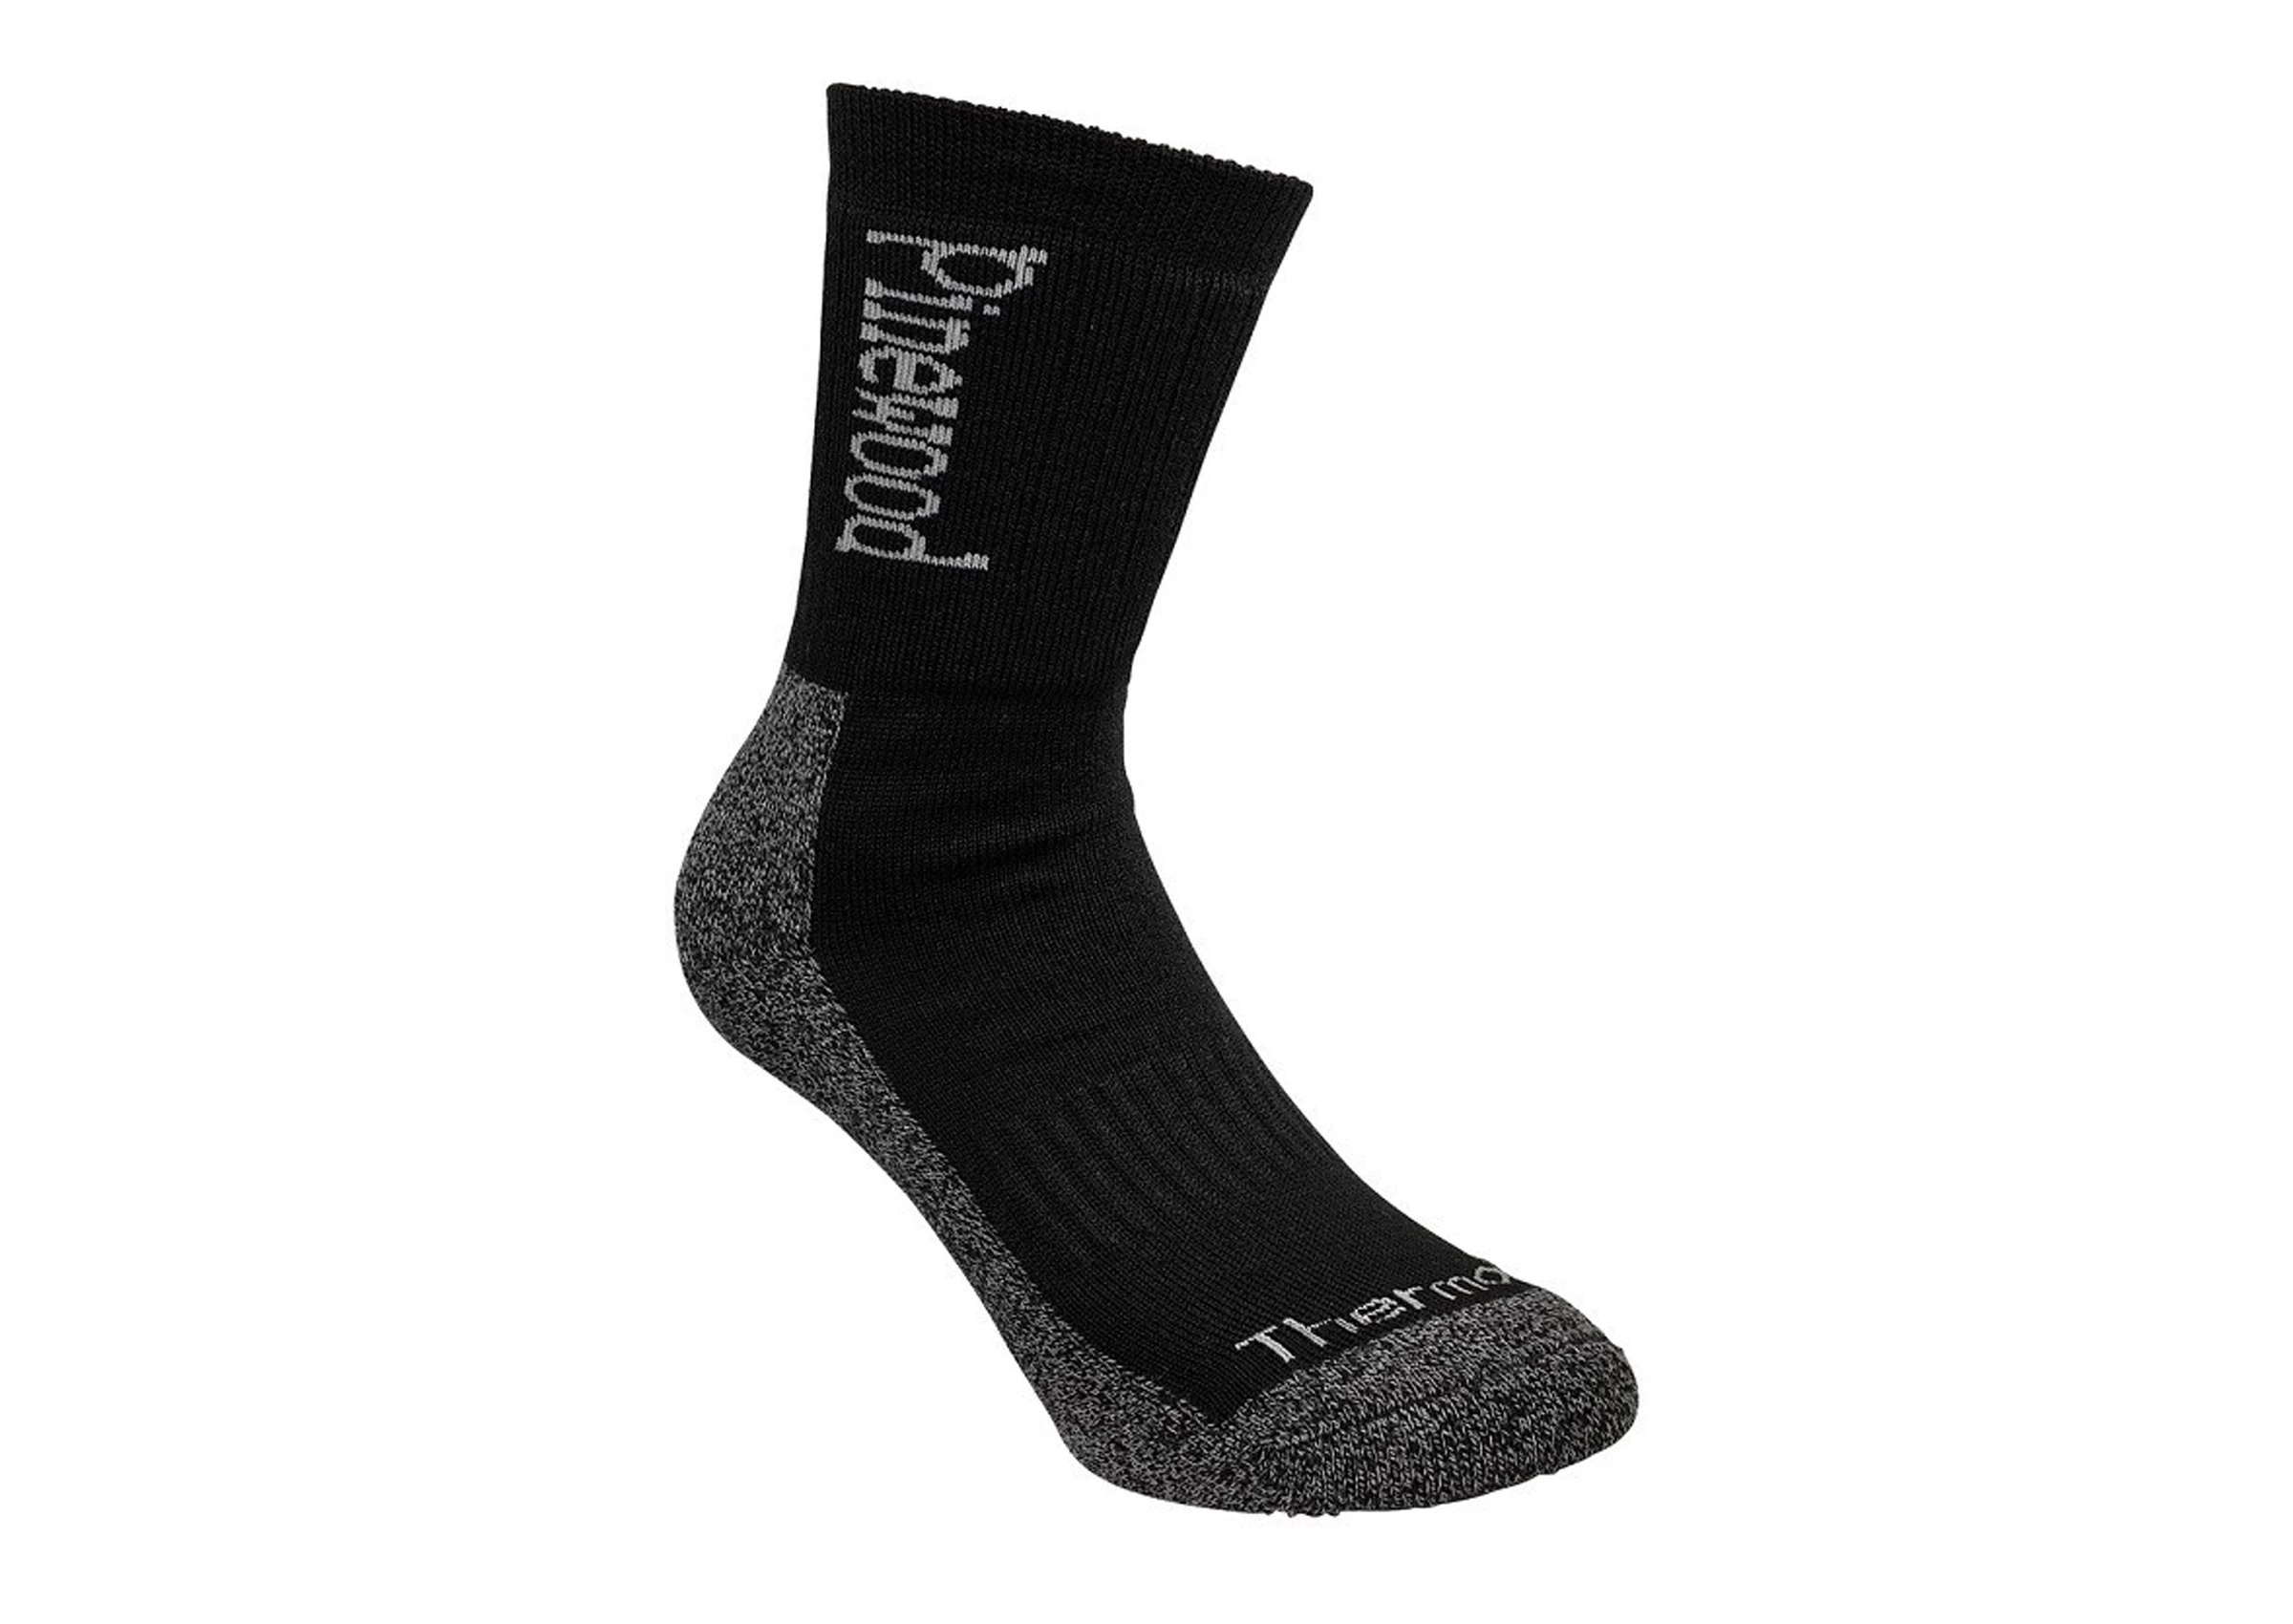 Pinewood Thermolite Outdoor-Socken #37-39 Black